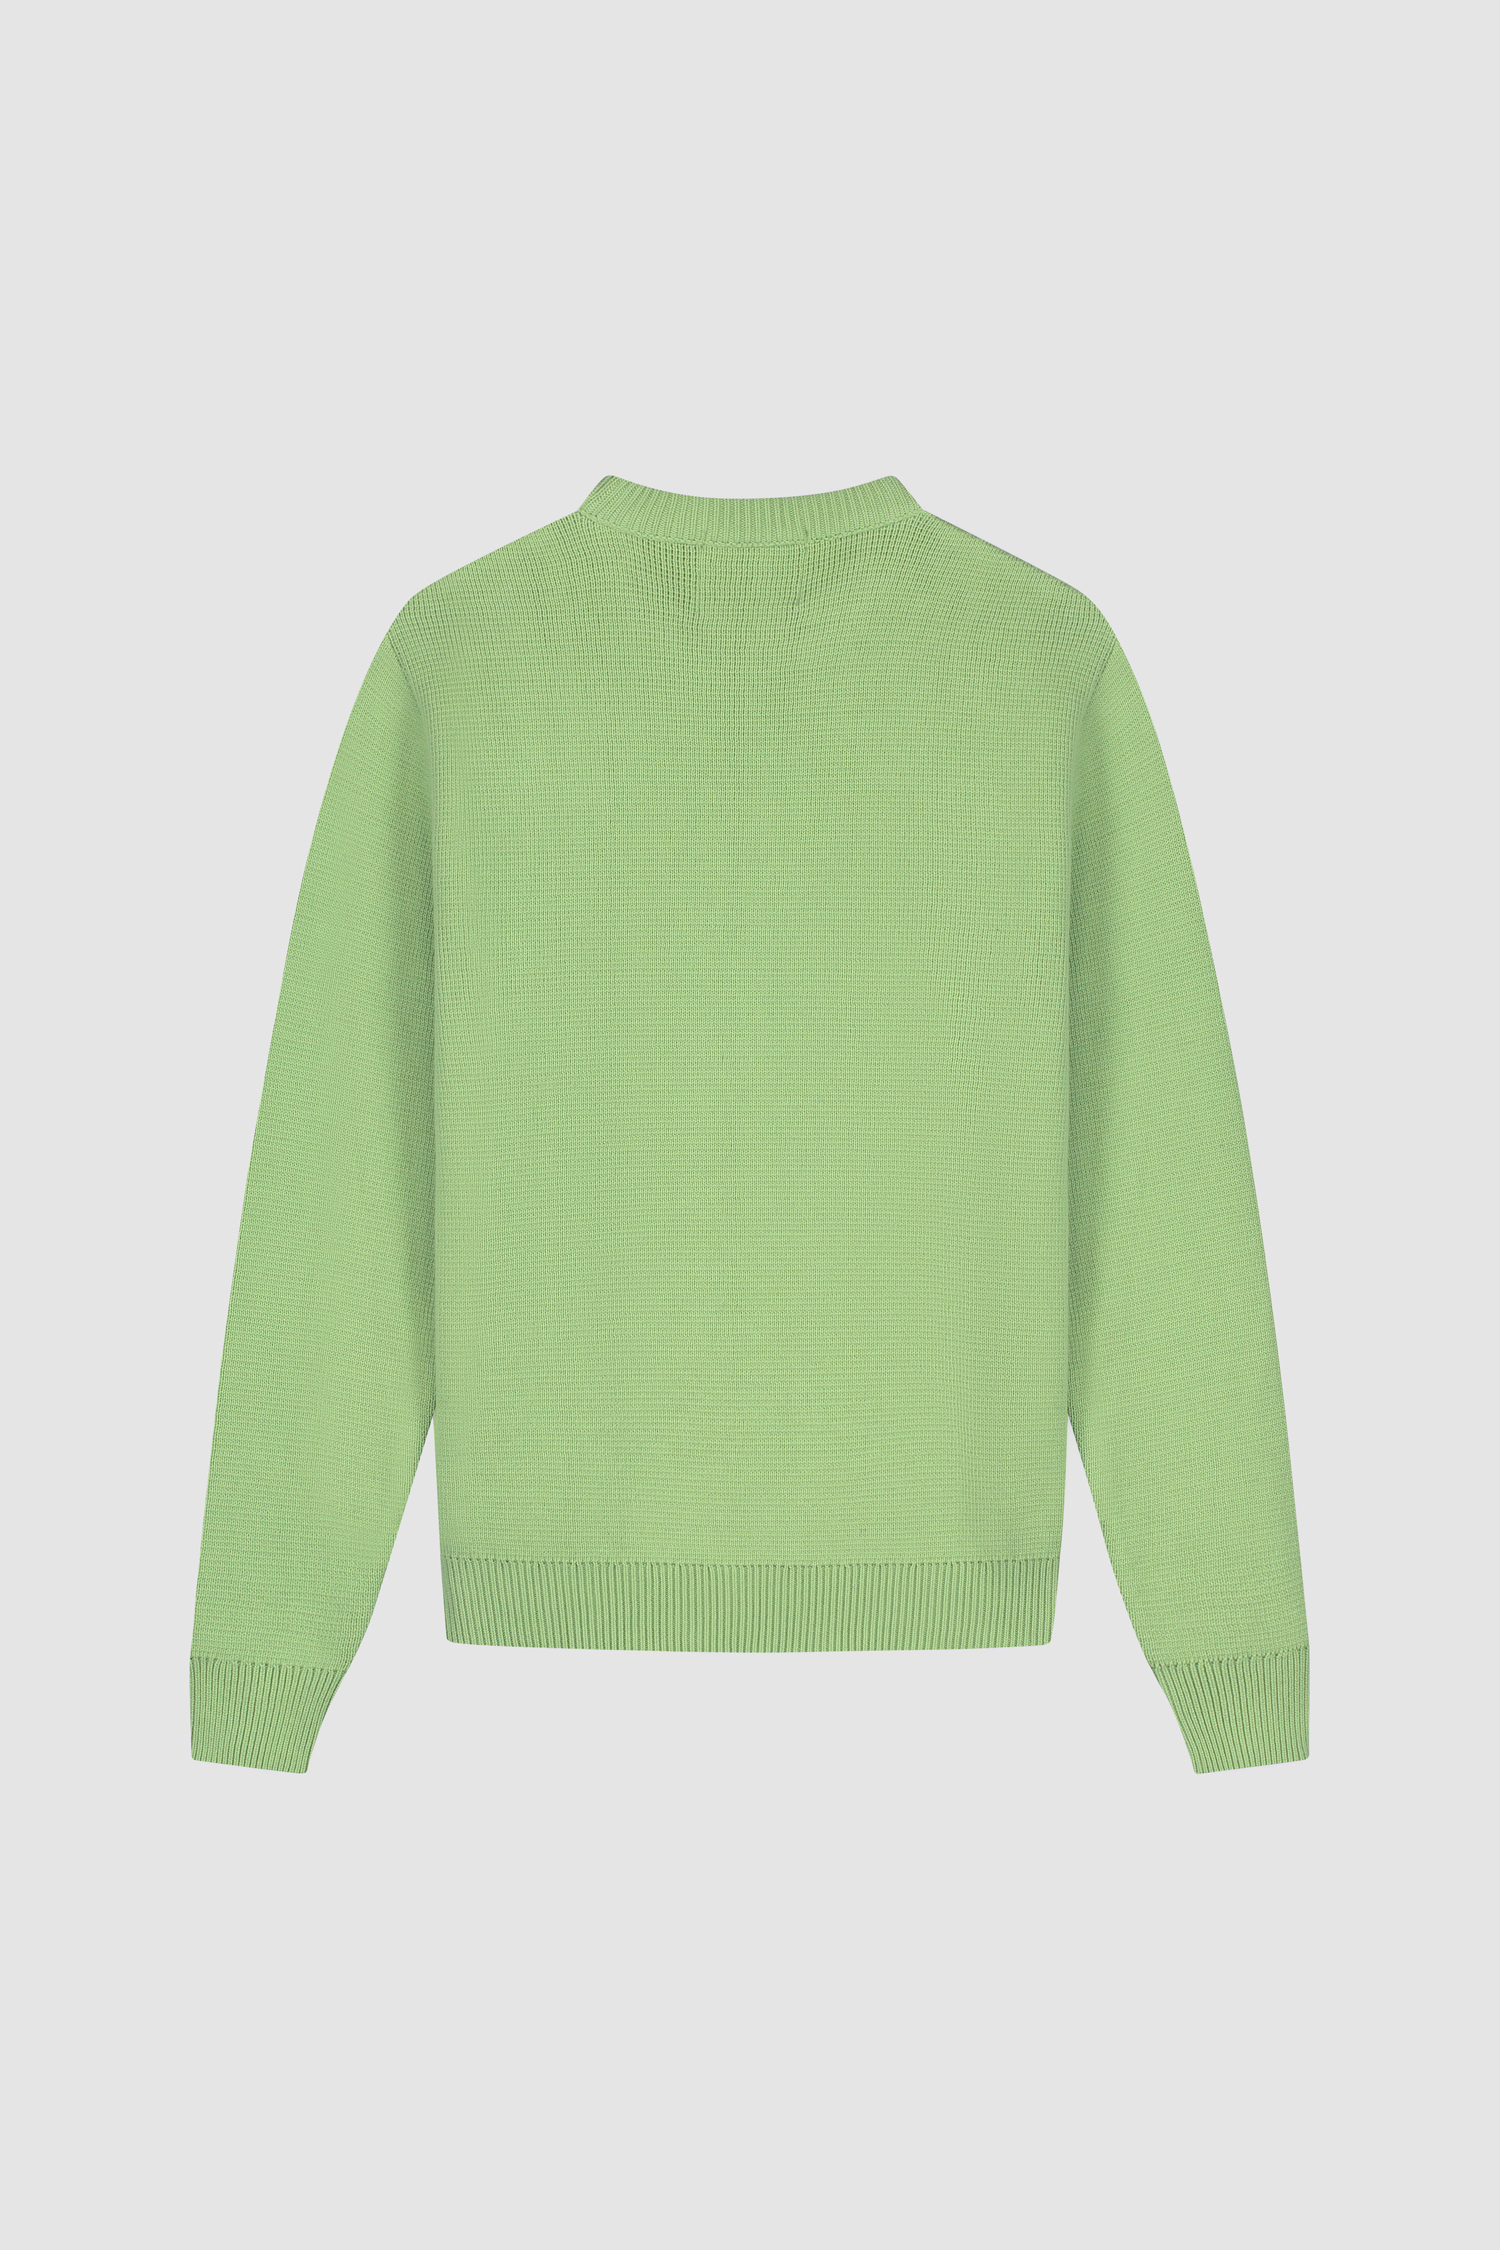 Kobe Pixel Dancers Sweater - Light Green